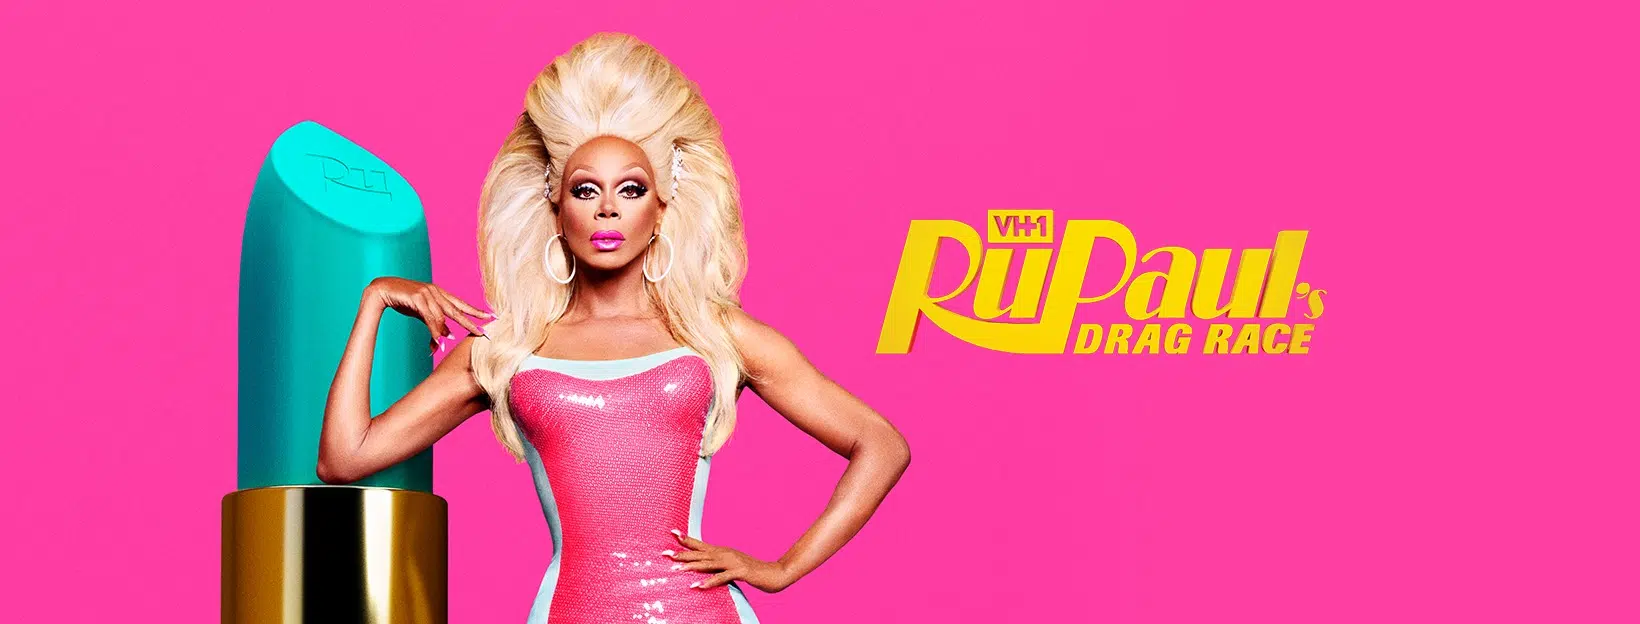 RuPaul's Drag Race - Vegas Edition